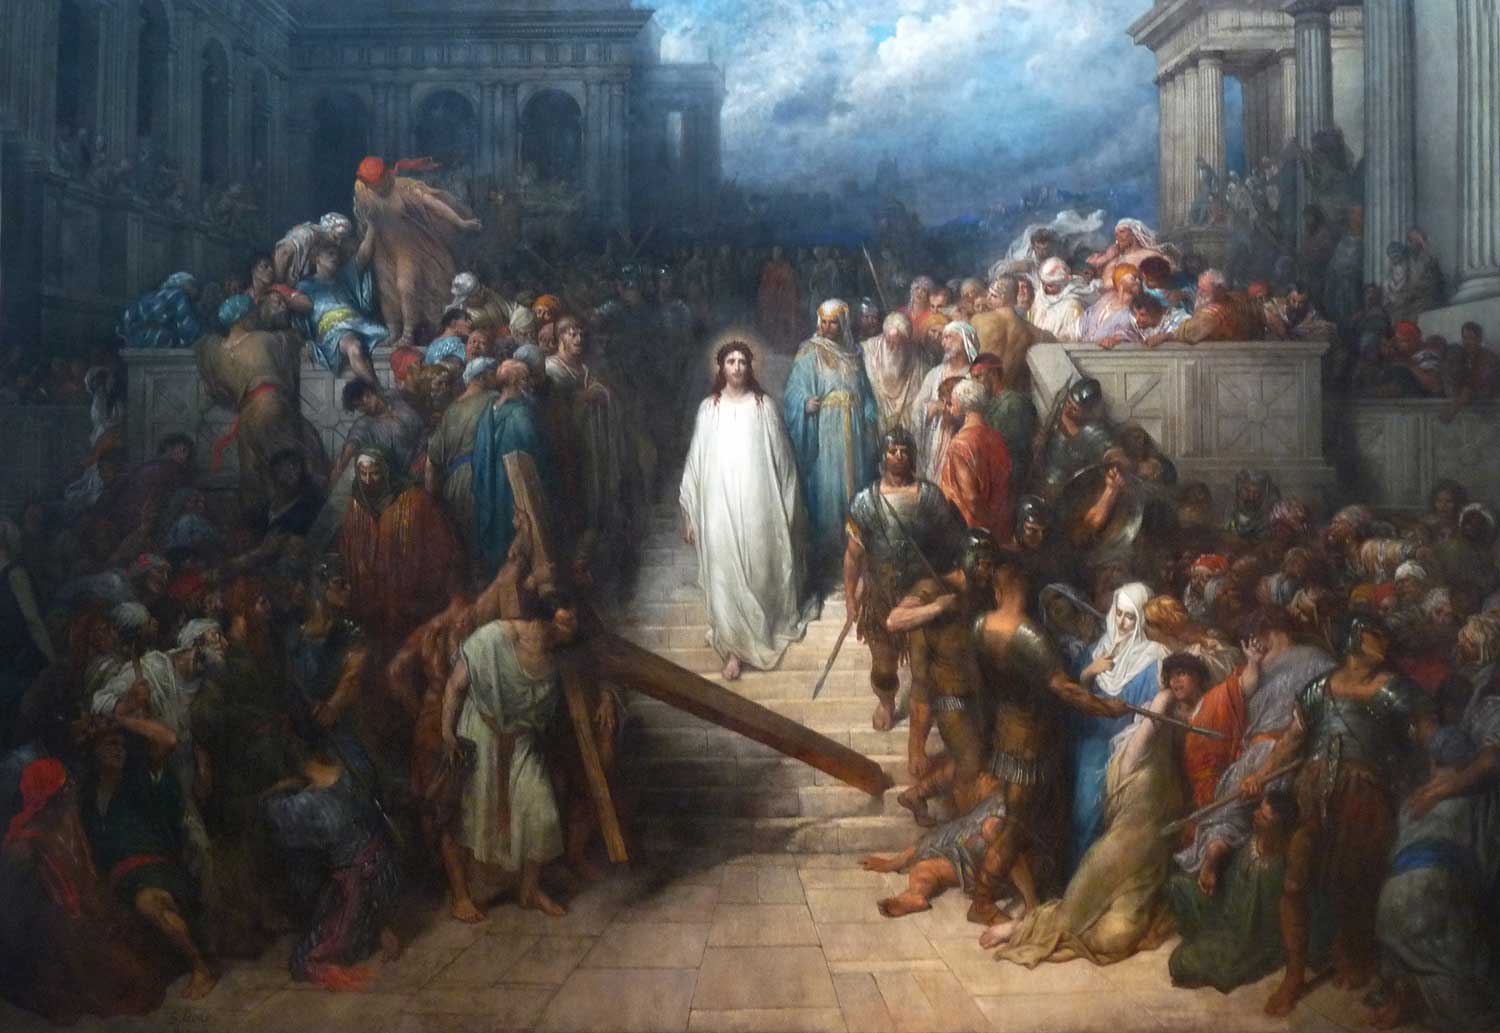 Christ Leaving the Praetorium (Gustave Doré)